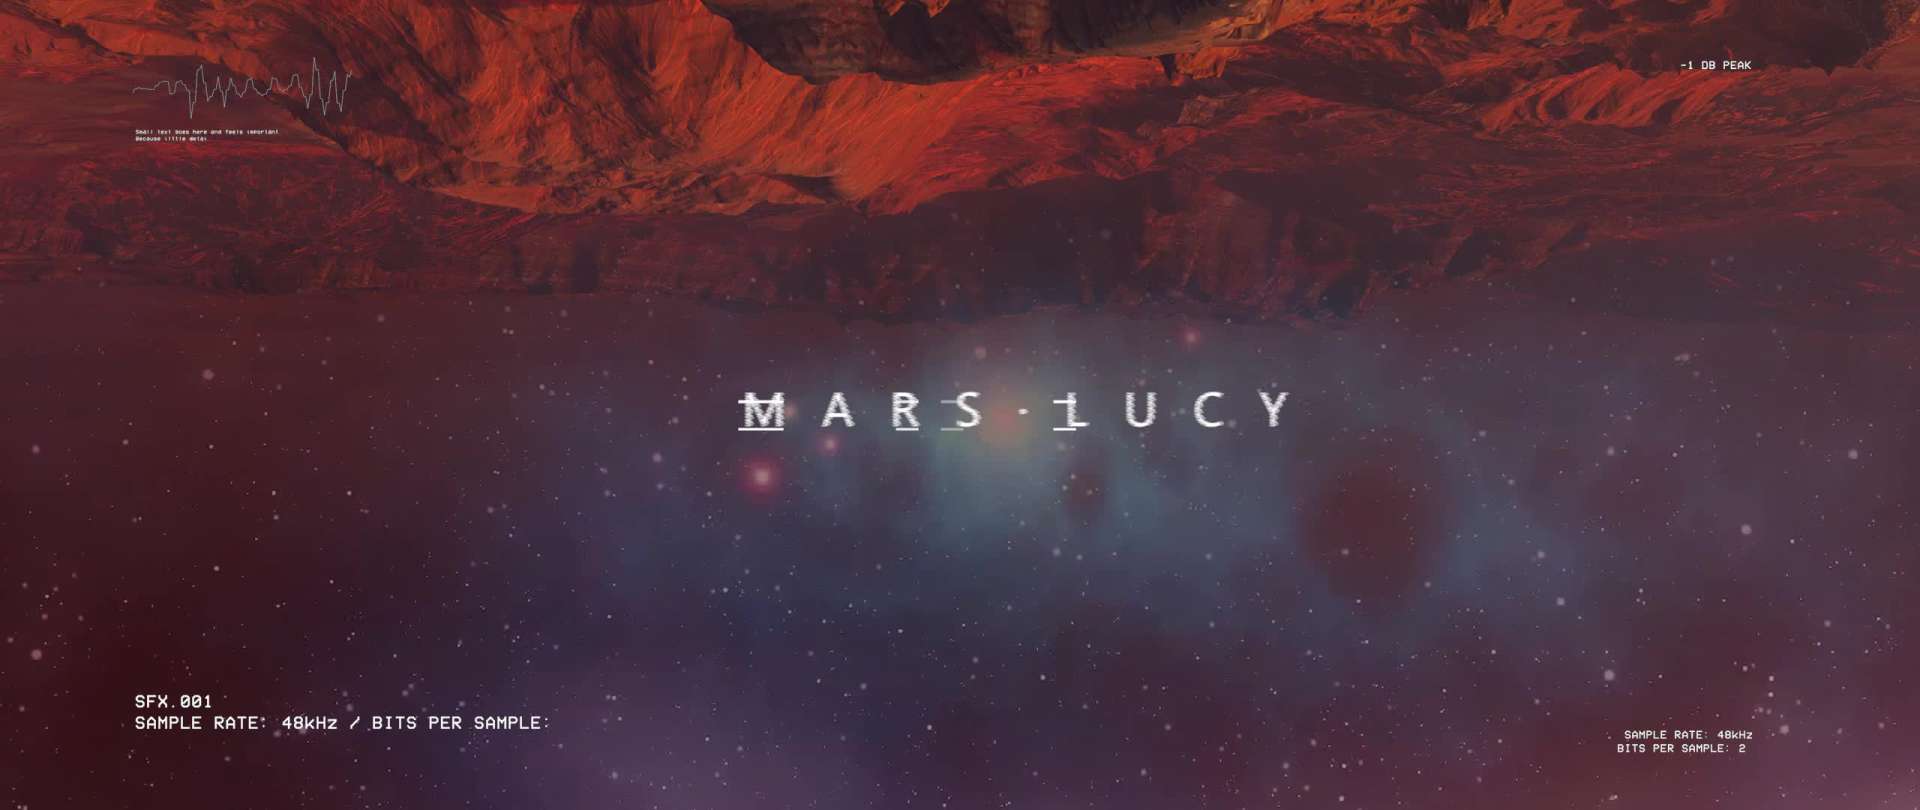 MARS-LUCY